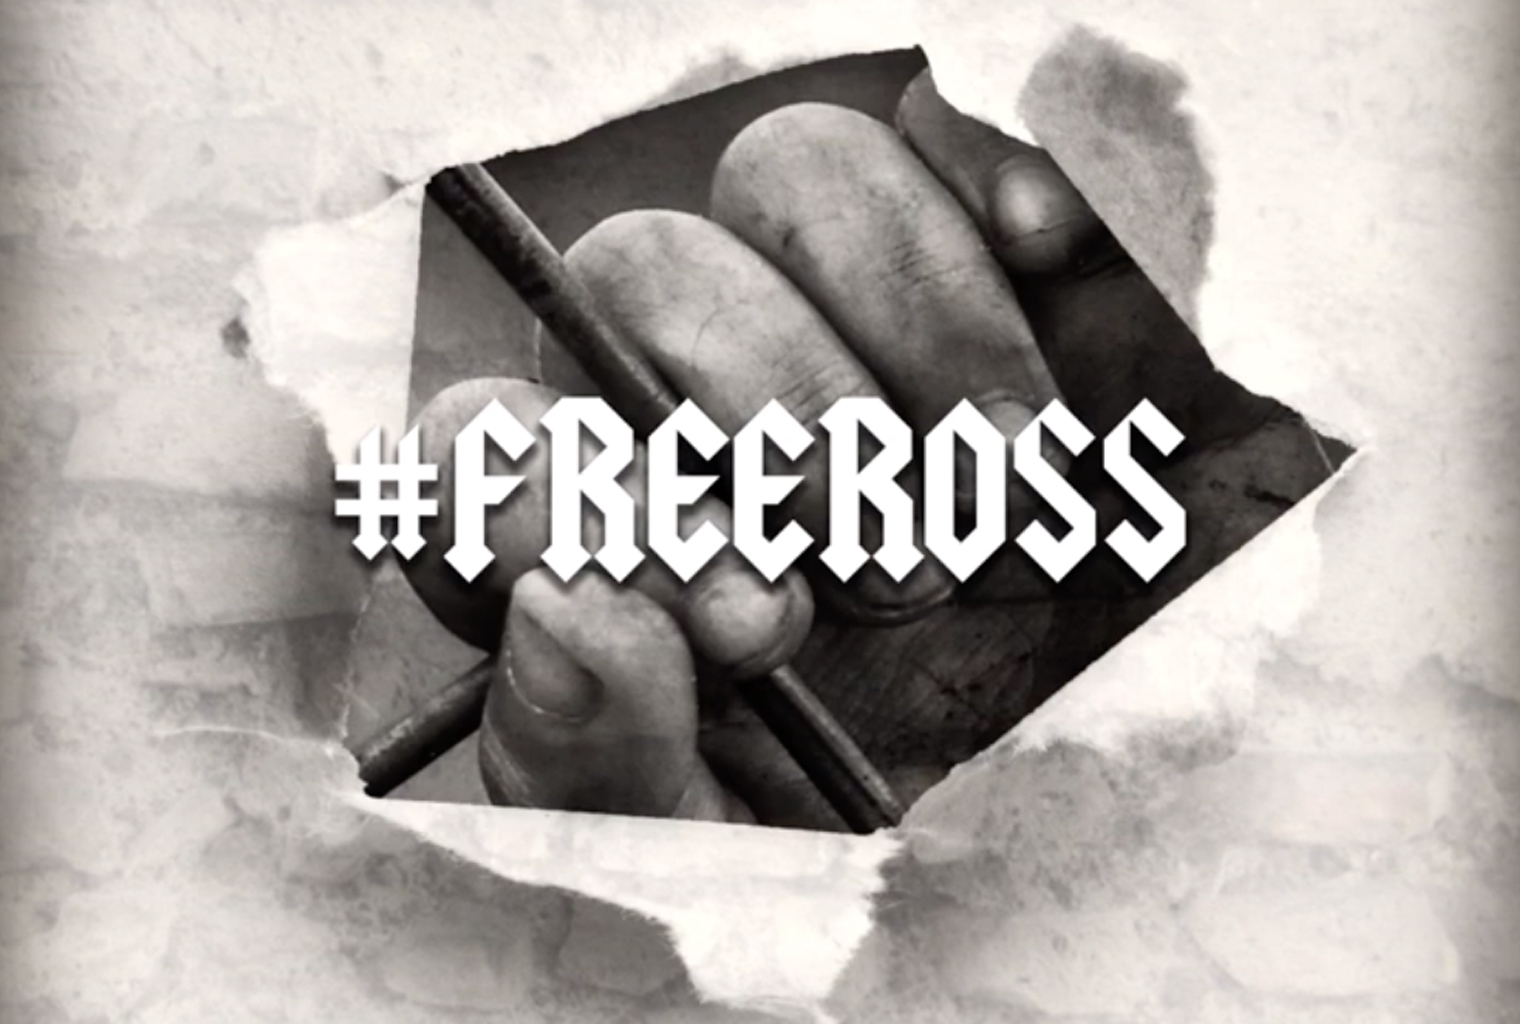 Vermont Rapper Releases Hip Hop Track '#Freeross,' Ulbricht Petition Nears 300K Signatures